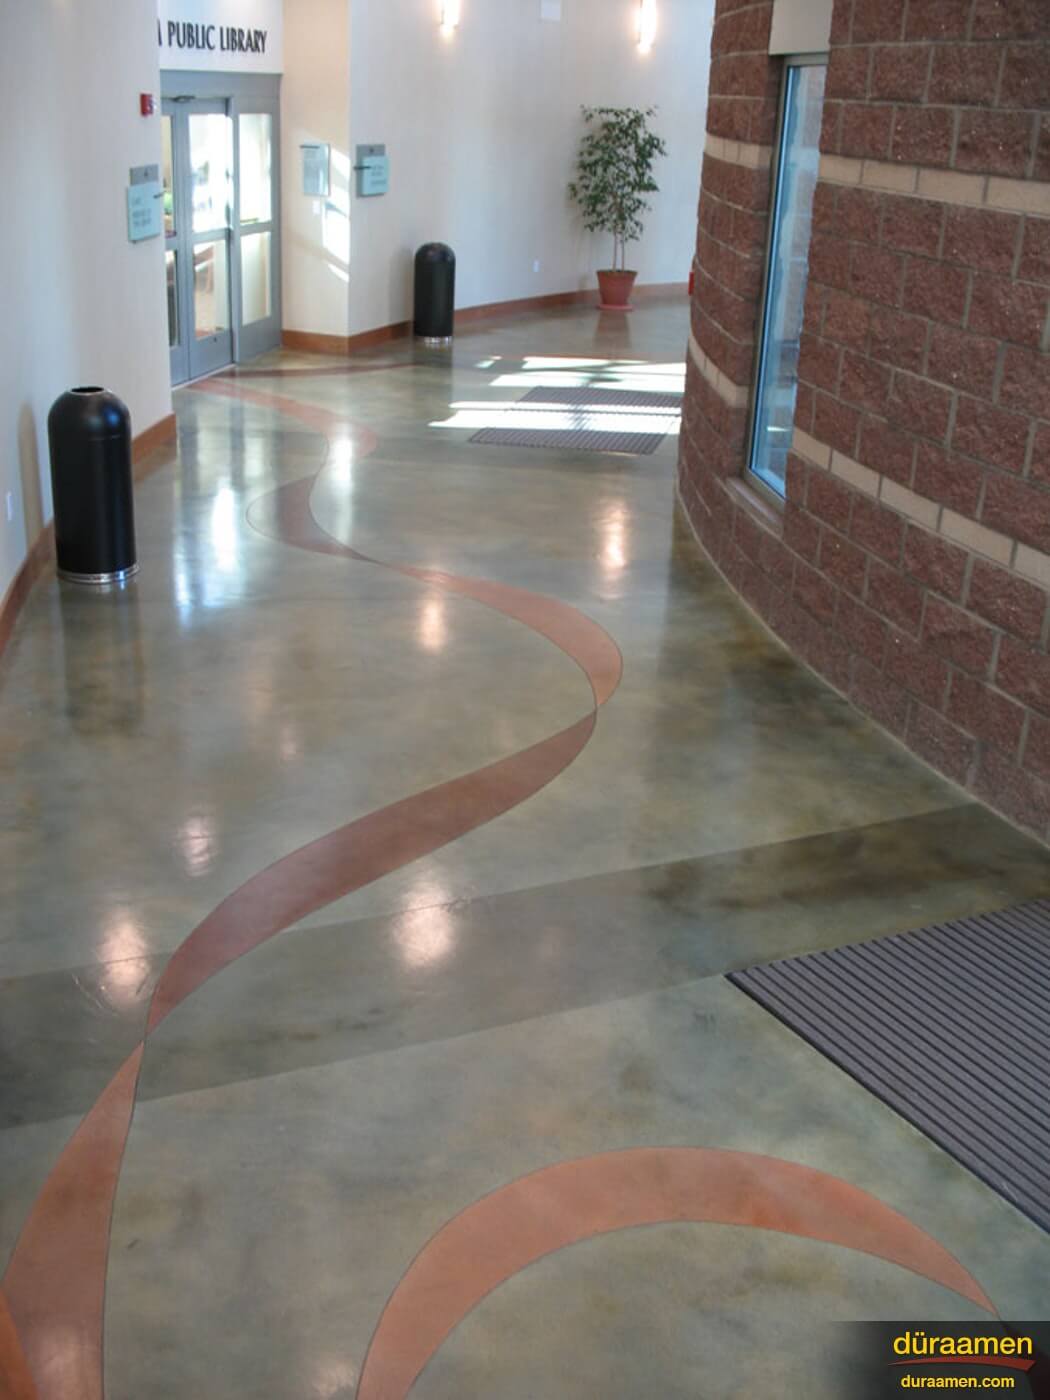 librarystainedfloordesign1nbspStained Concrete floor at Sacramento Public Library CA | Duraamen Engineered Products Inc